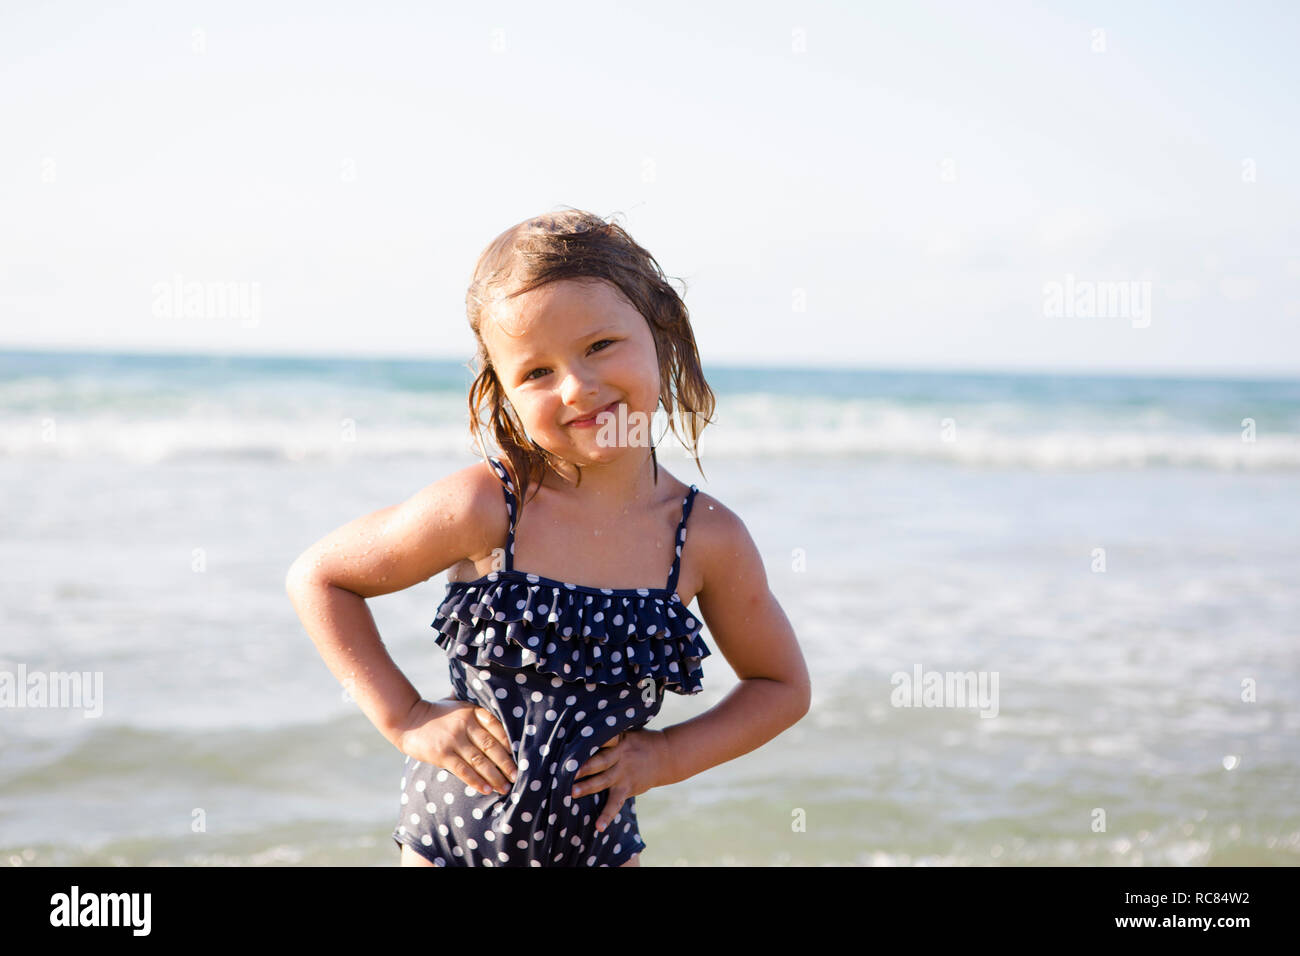 Cute girl on beach in spotted swimming costume, portrait, Castellammare del Golfo, Sicily, Italy Stock Photo